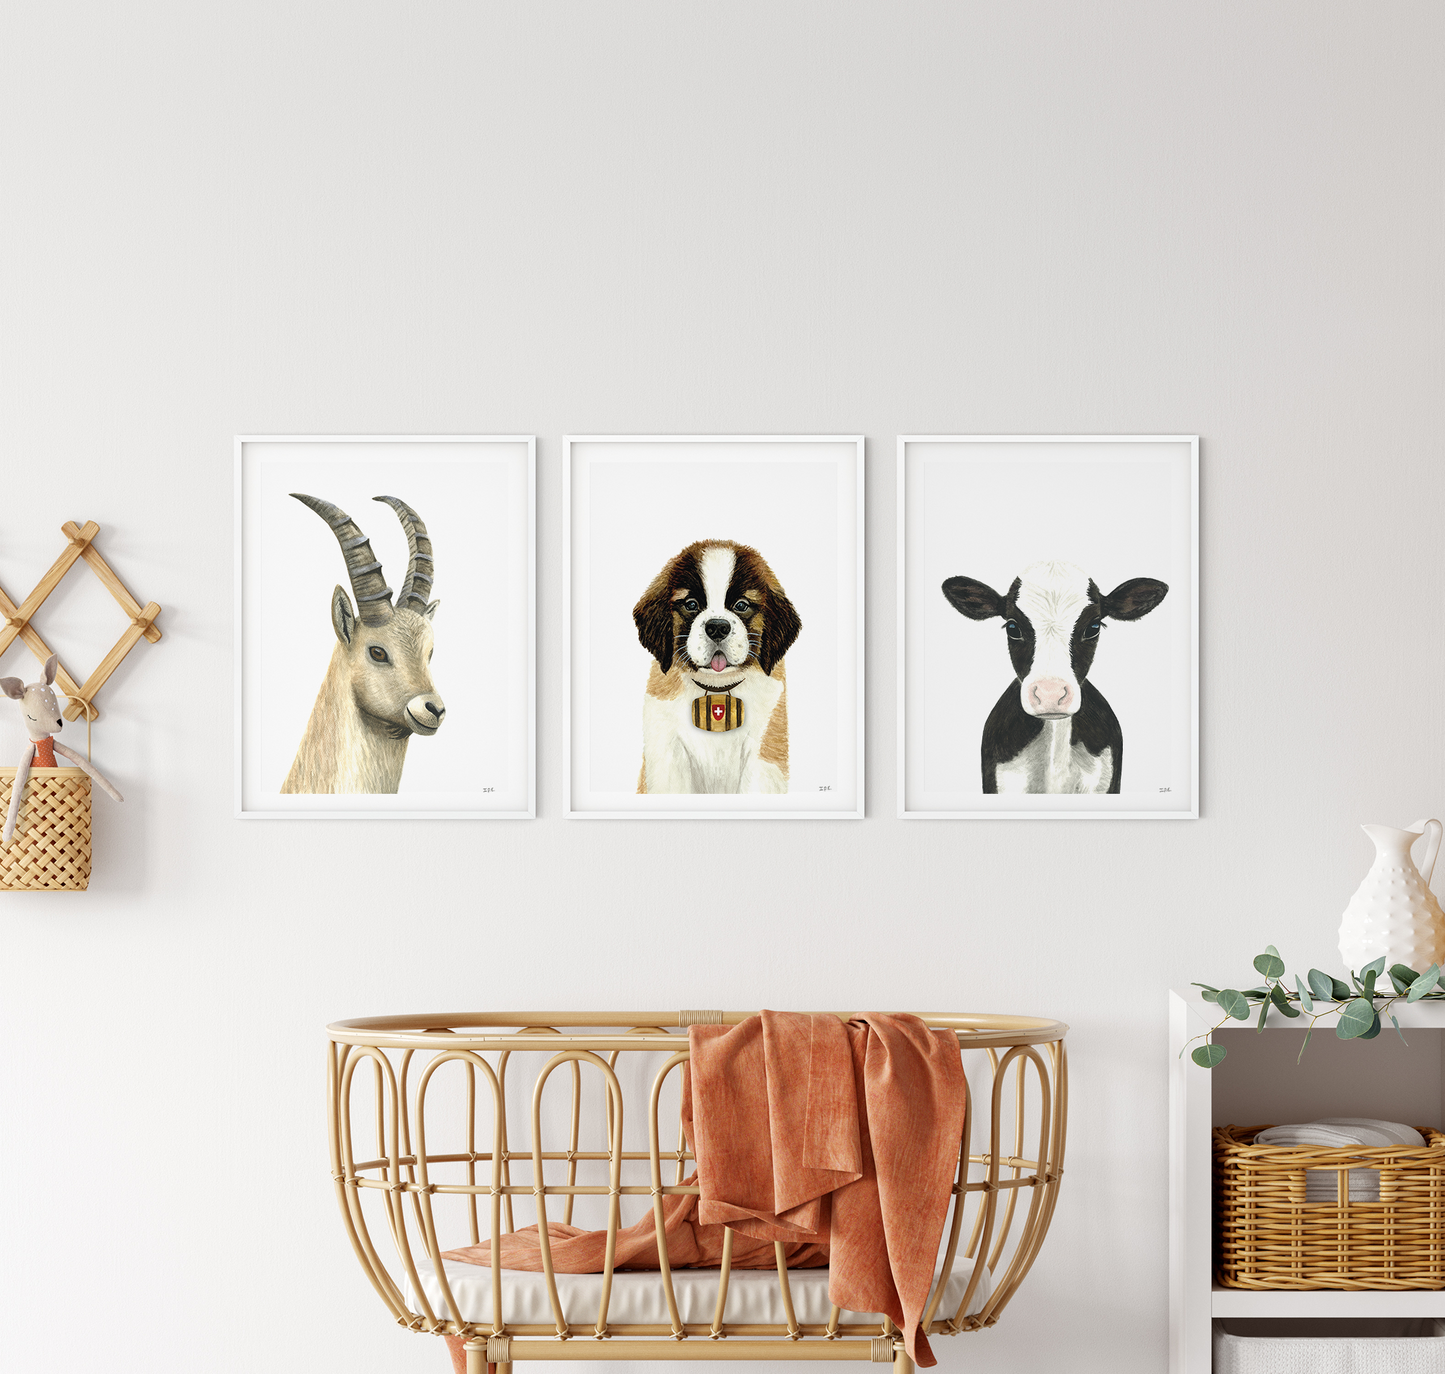 Set of 3 Swiss animal prints in a nursery as decor: ibex, Saint Bernard, kalf